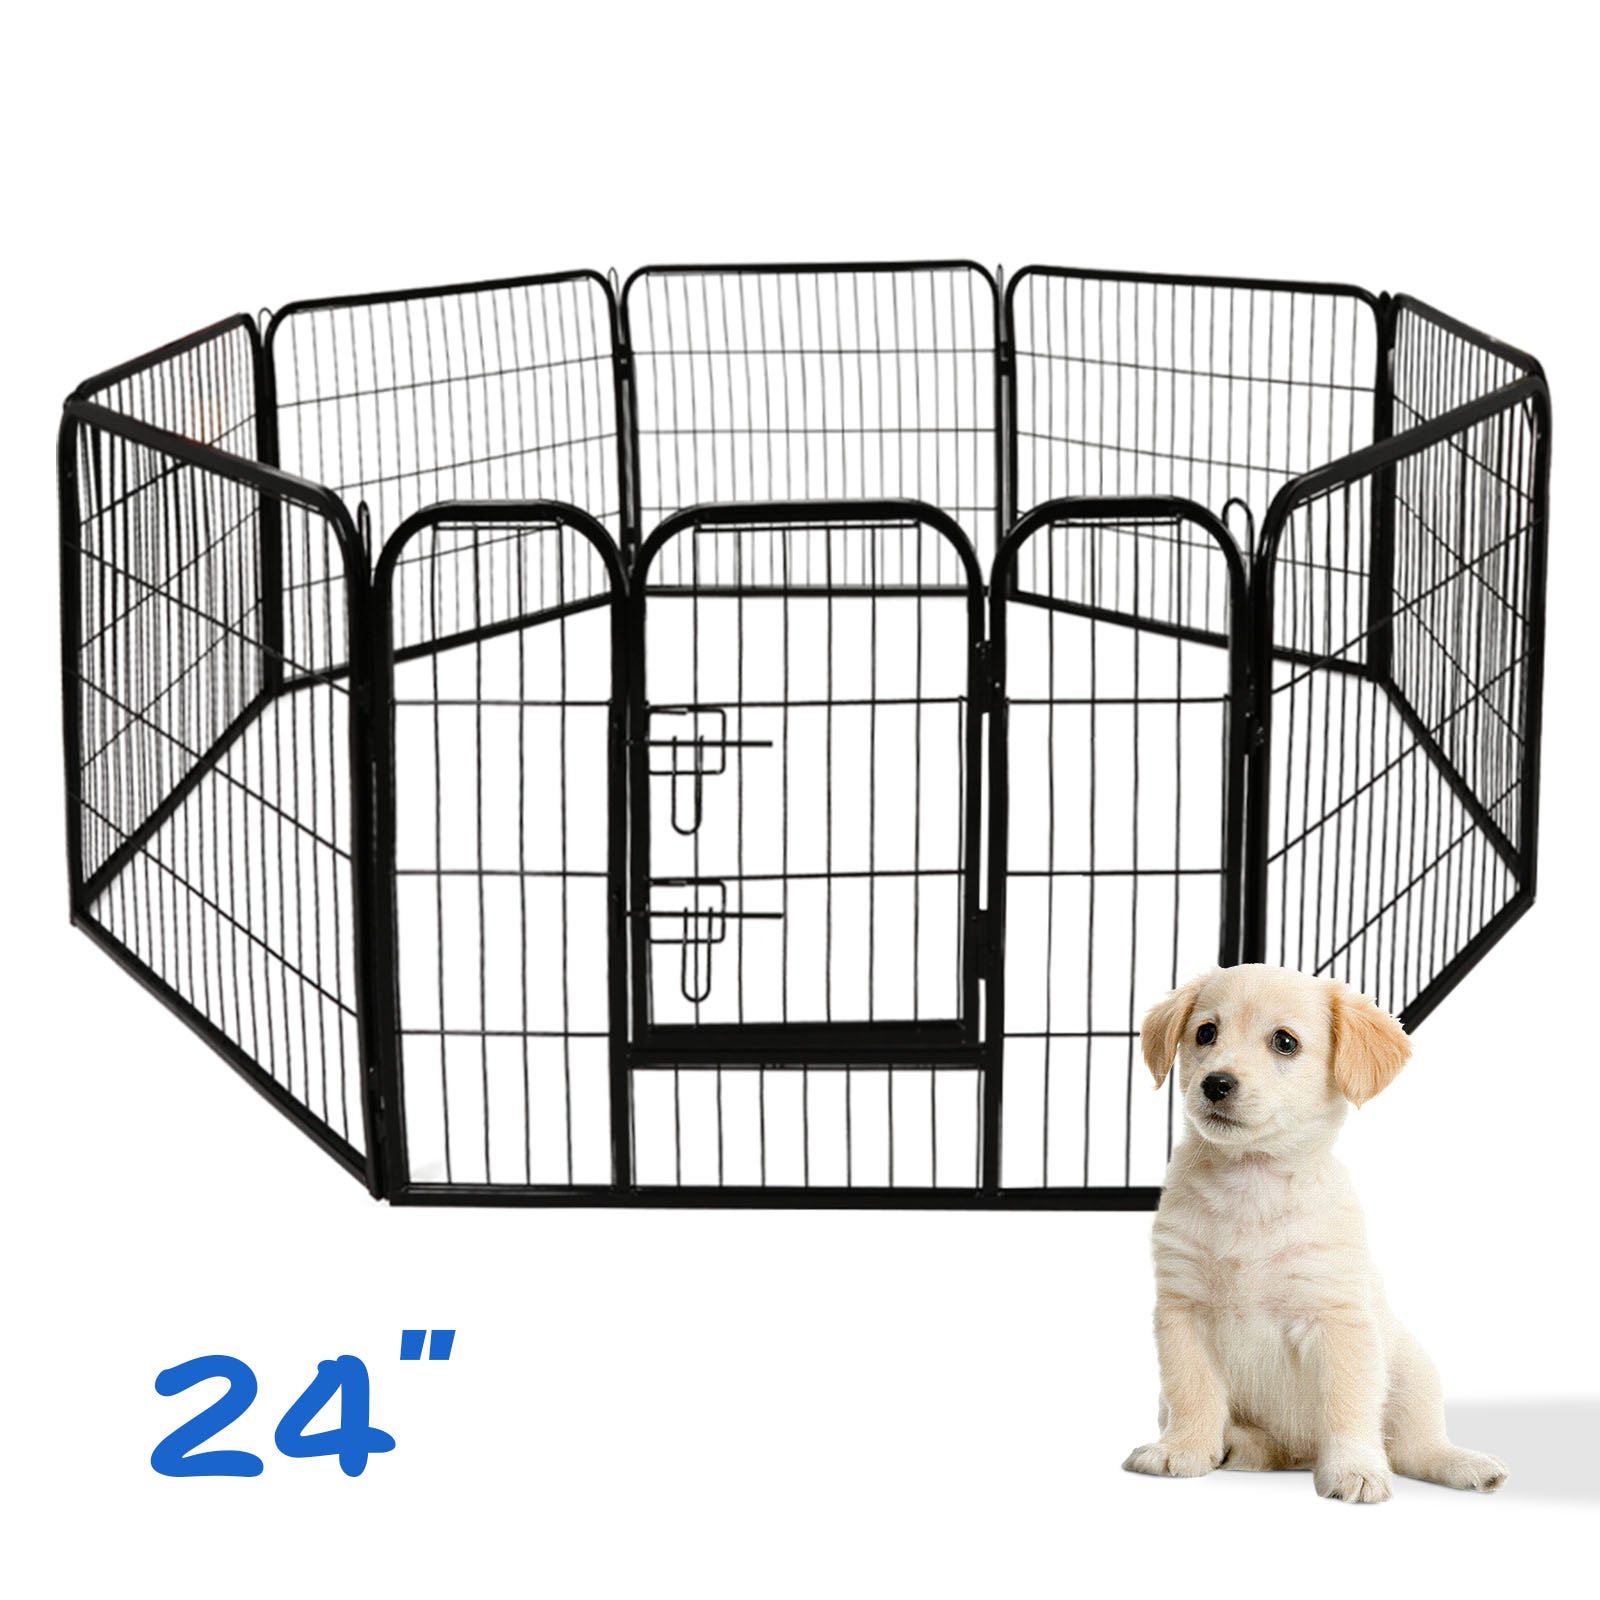 24" Pet Playpen Dog Dence Exercise Pen, 8 Panel Pet Dog Playpen Puppy Enclosure Fence Play Pen, Indoor/Outdoor Foldable Metal Fitness Pen (Black, 79x61x8cm)